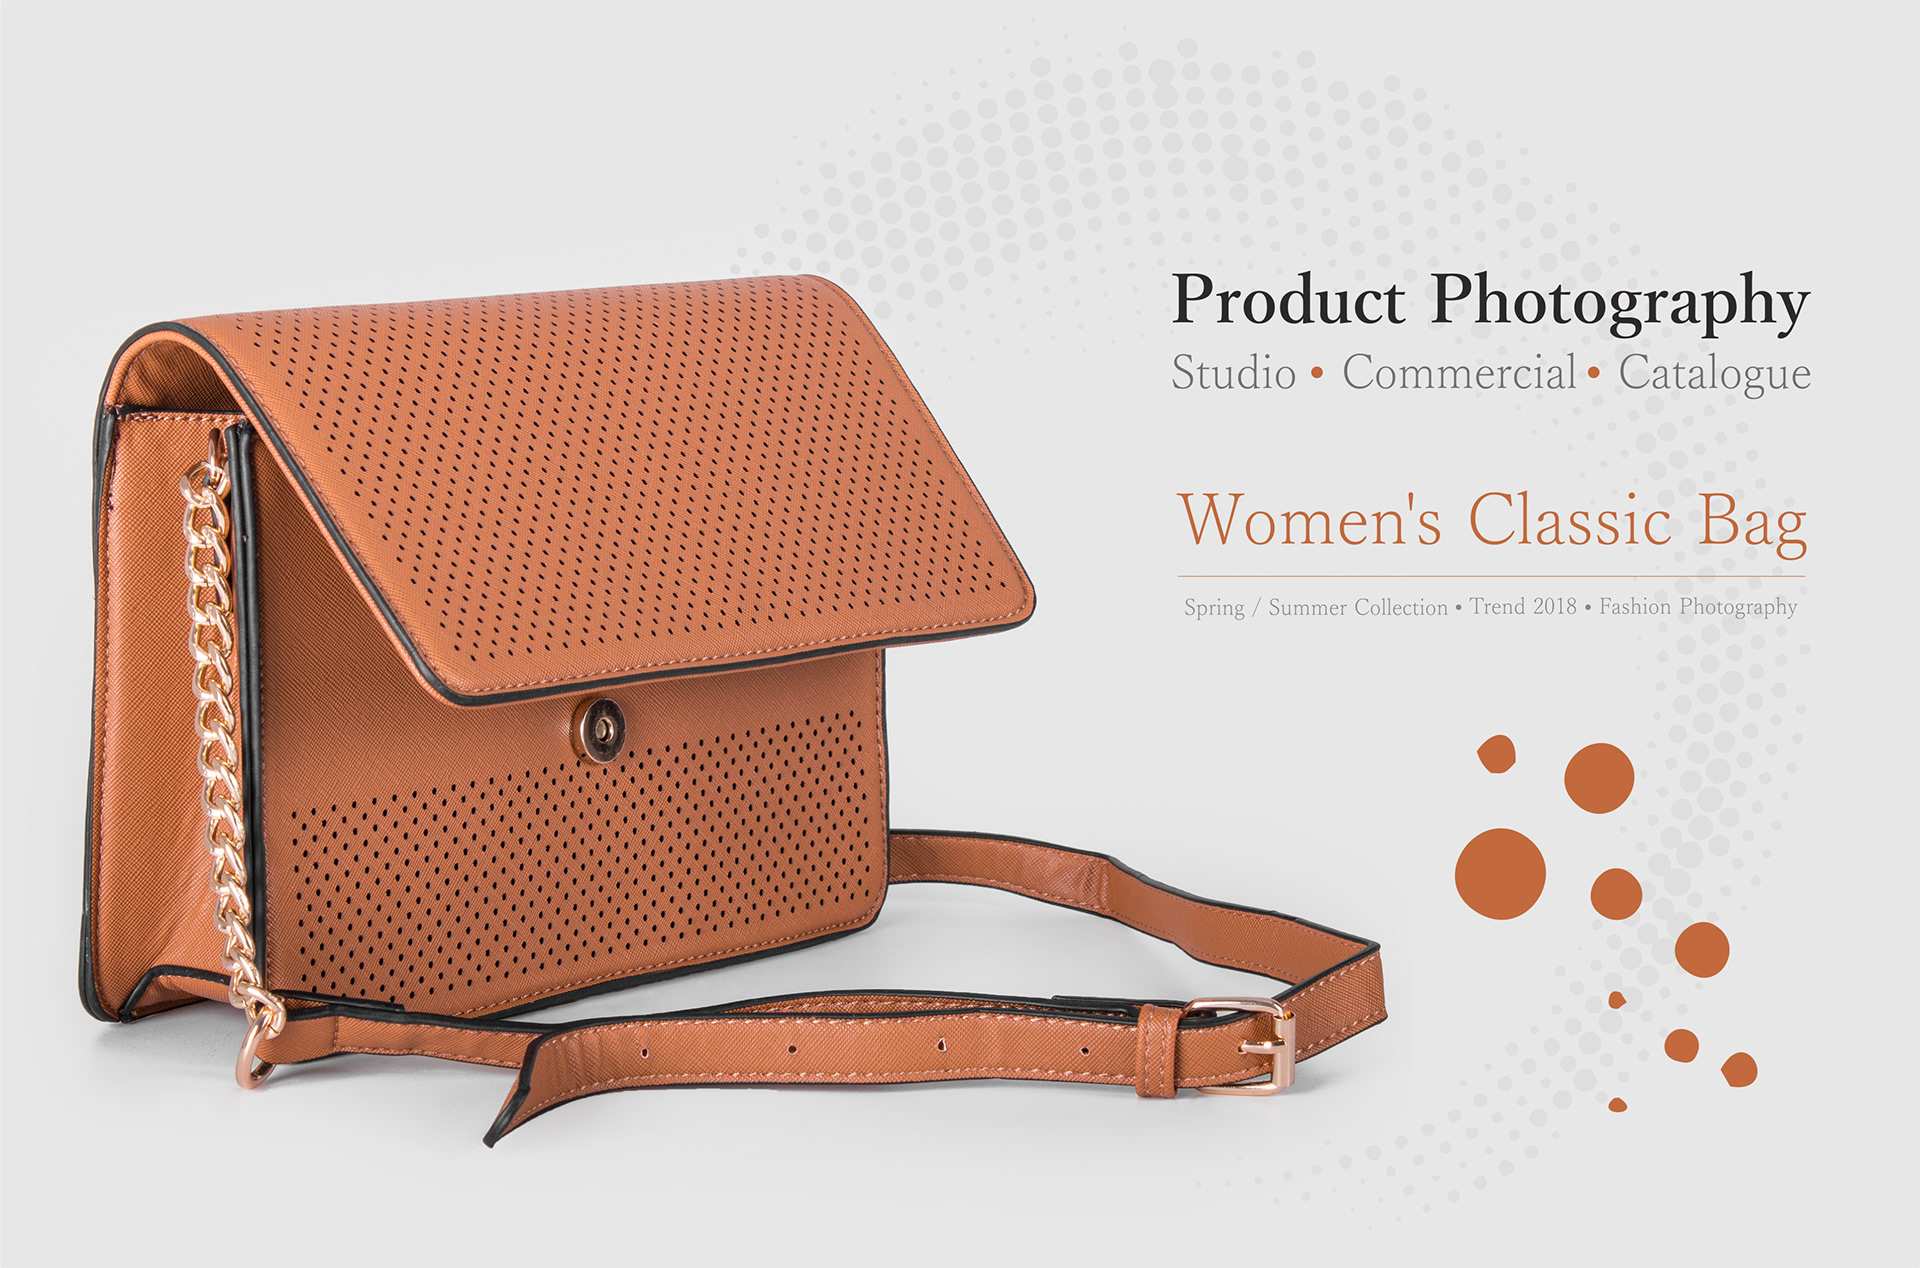 Veronica Popova - Women's Classic bag・Product Photography